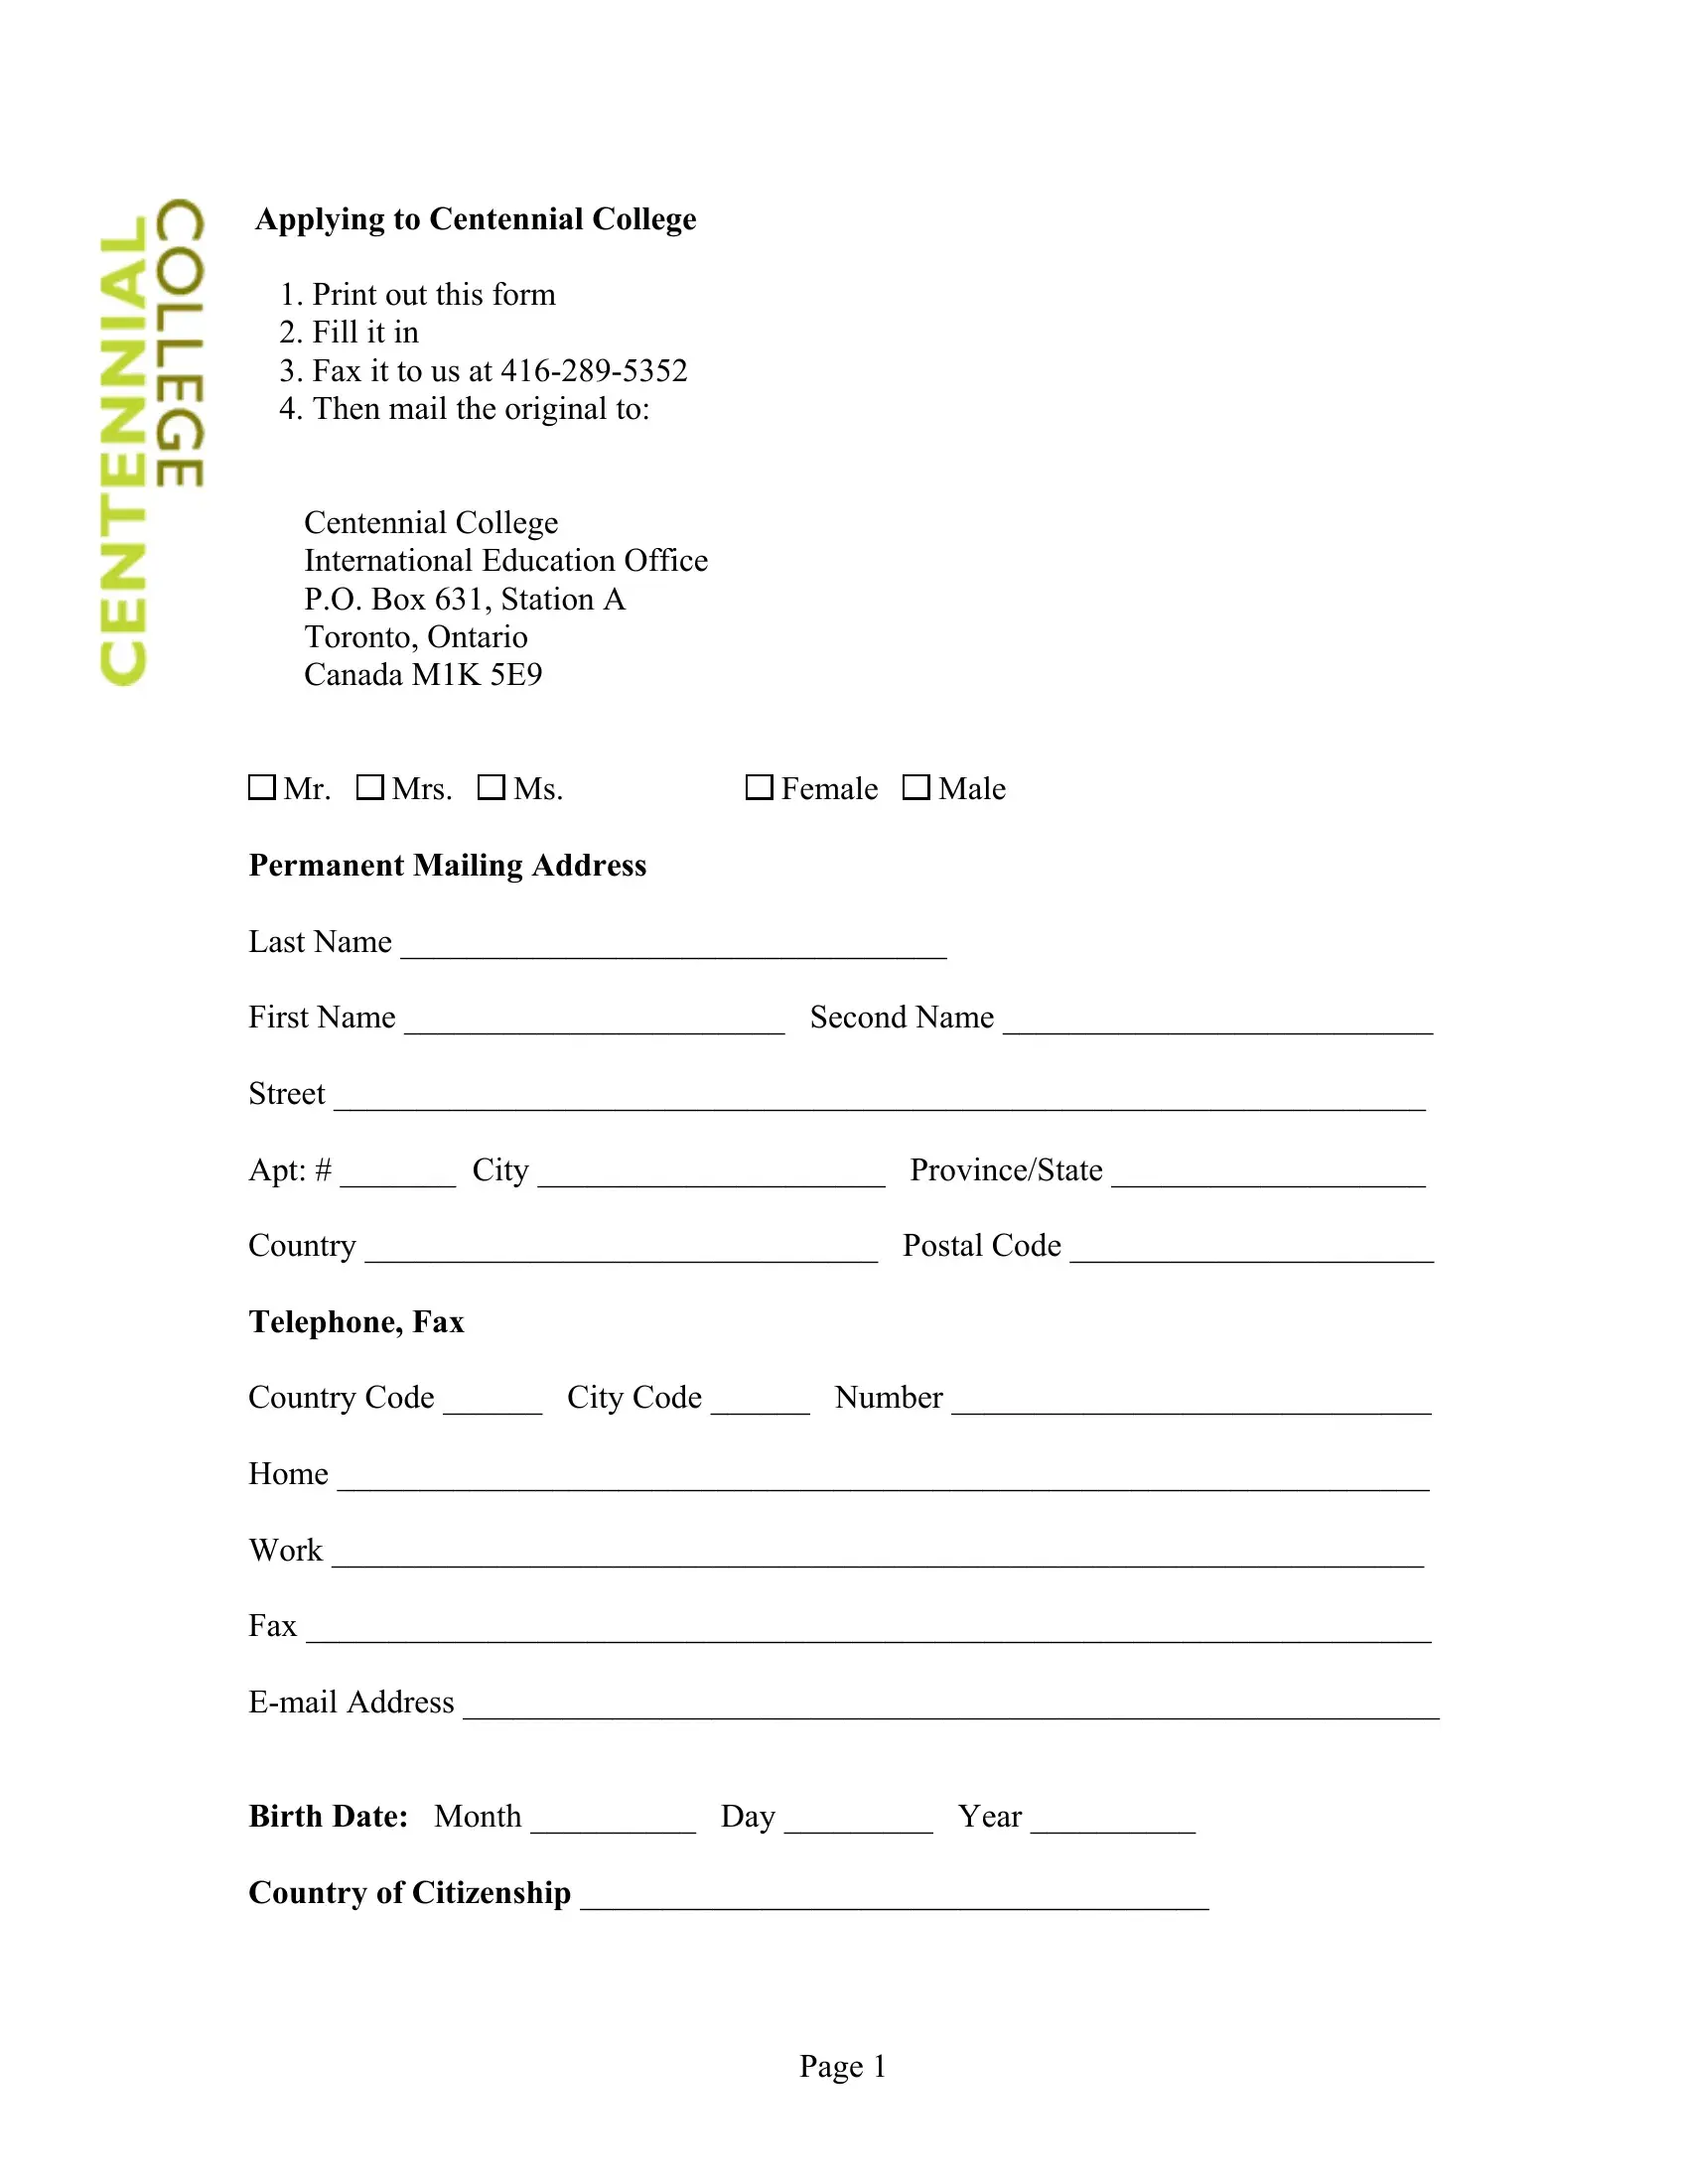 Centennial College Application Form Preview